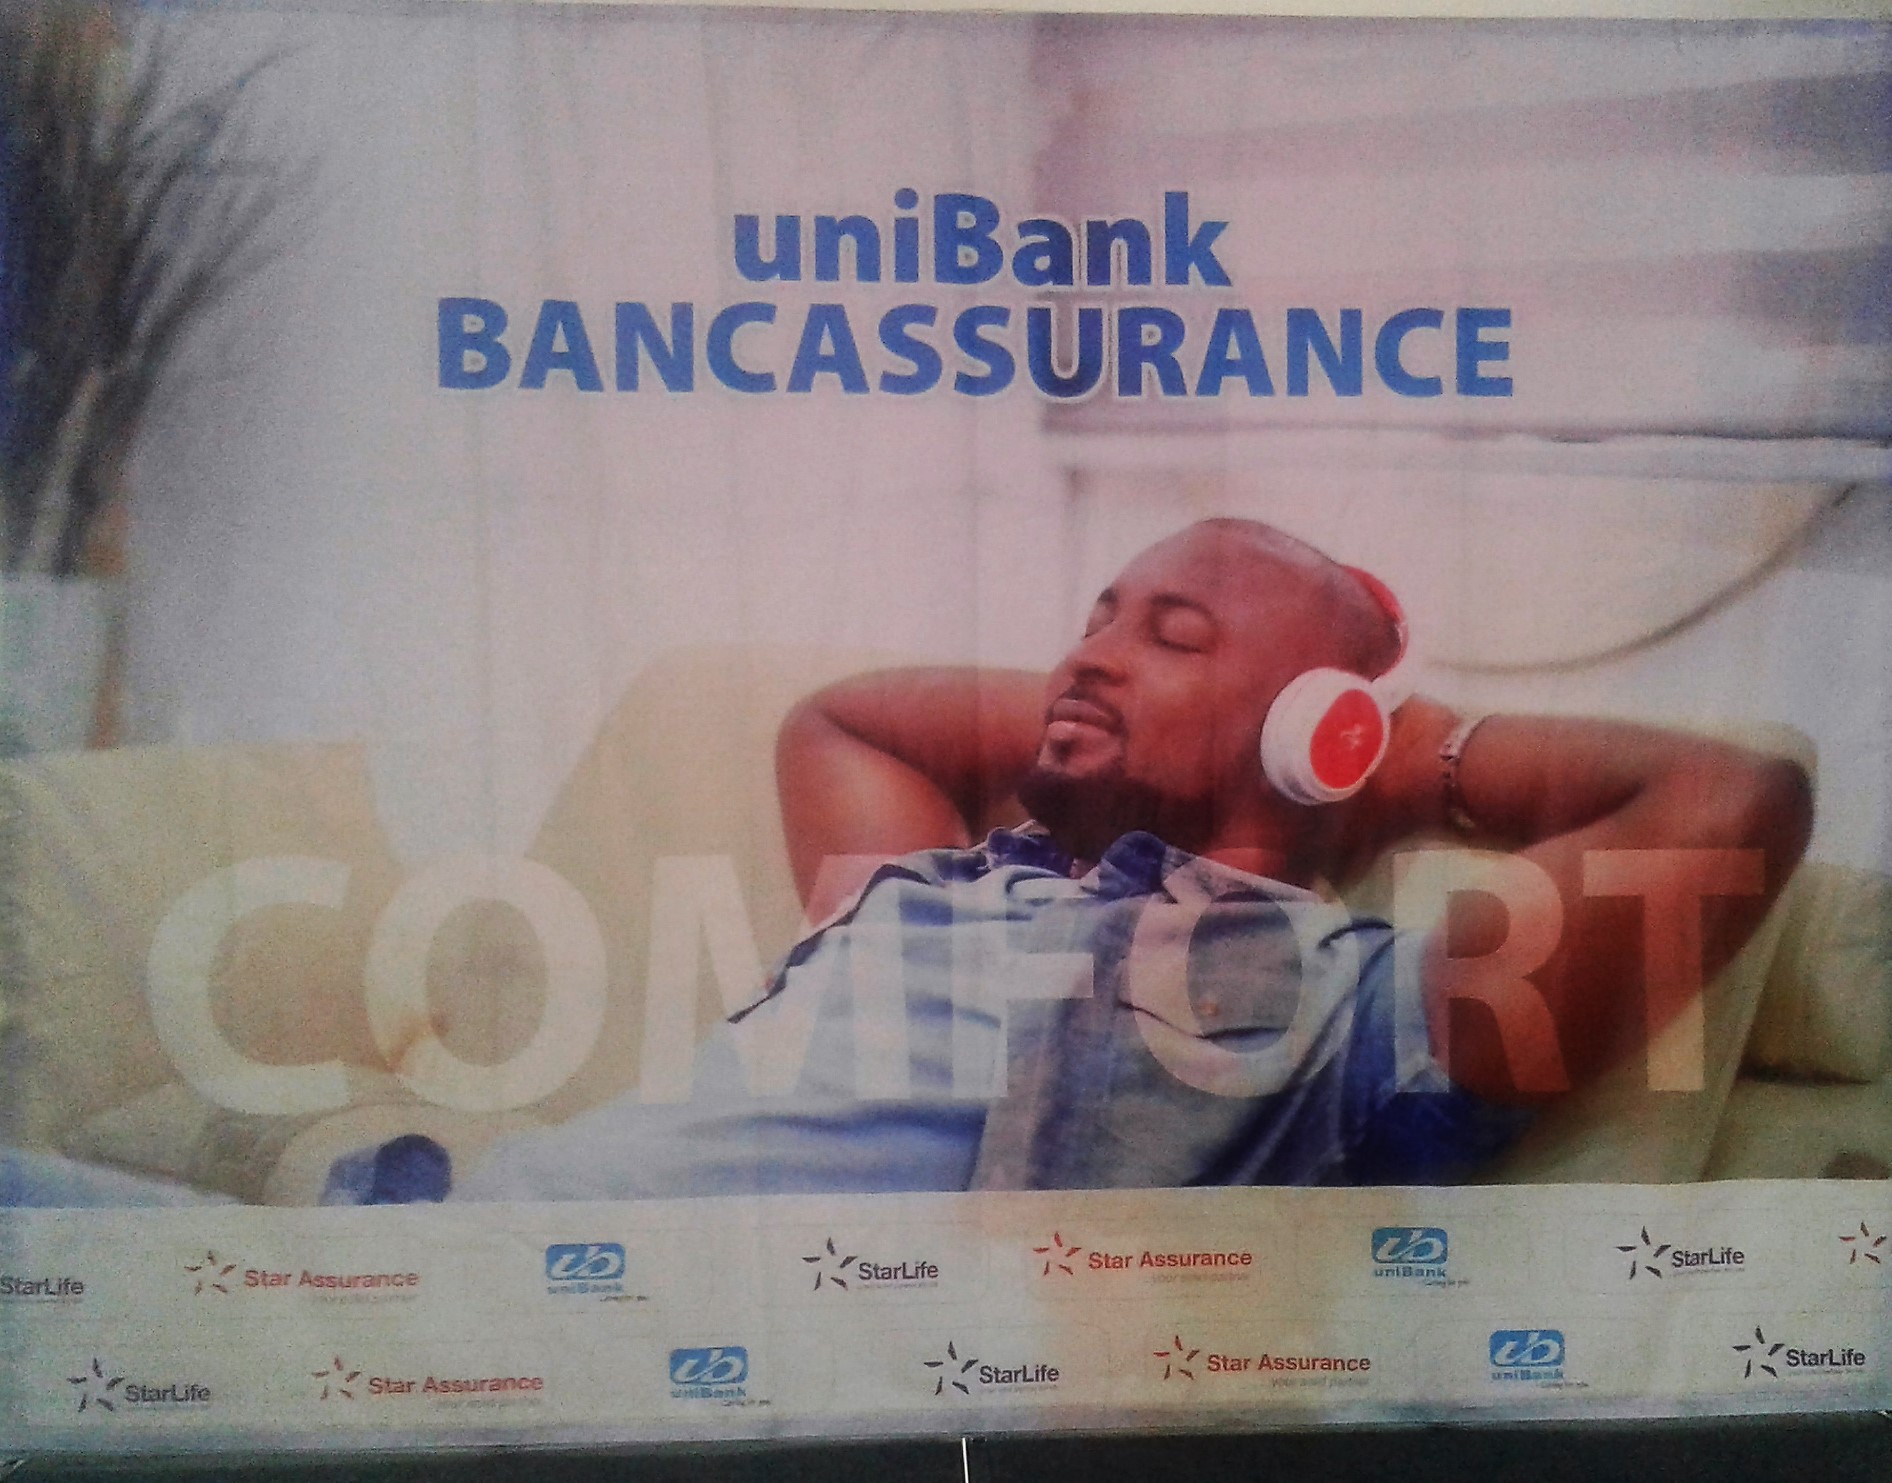 unibank_bancassurance